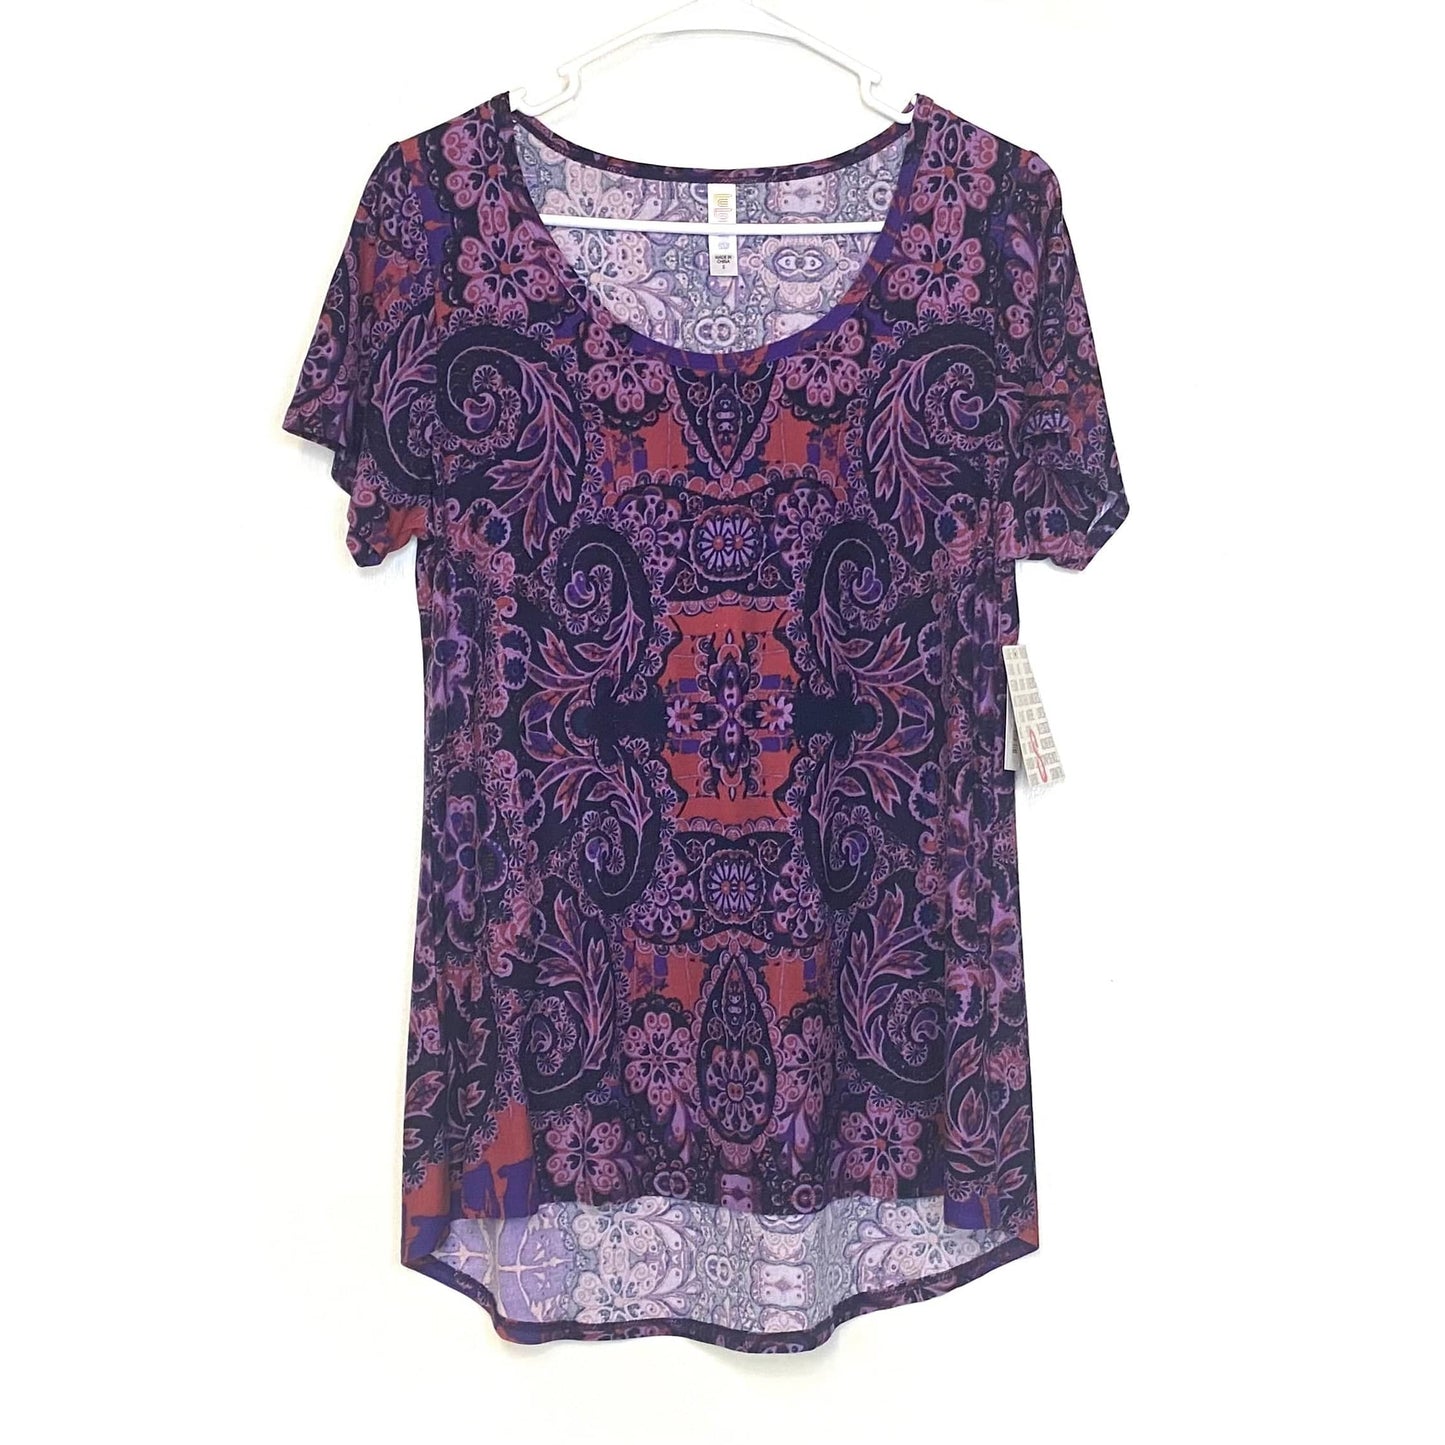 LuLaRoe Womens S Black/Purple Classic T Floral T-Shirt S/s NWT